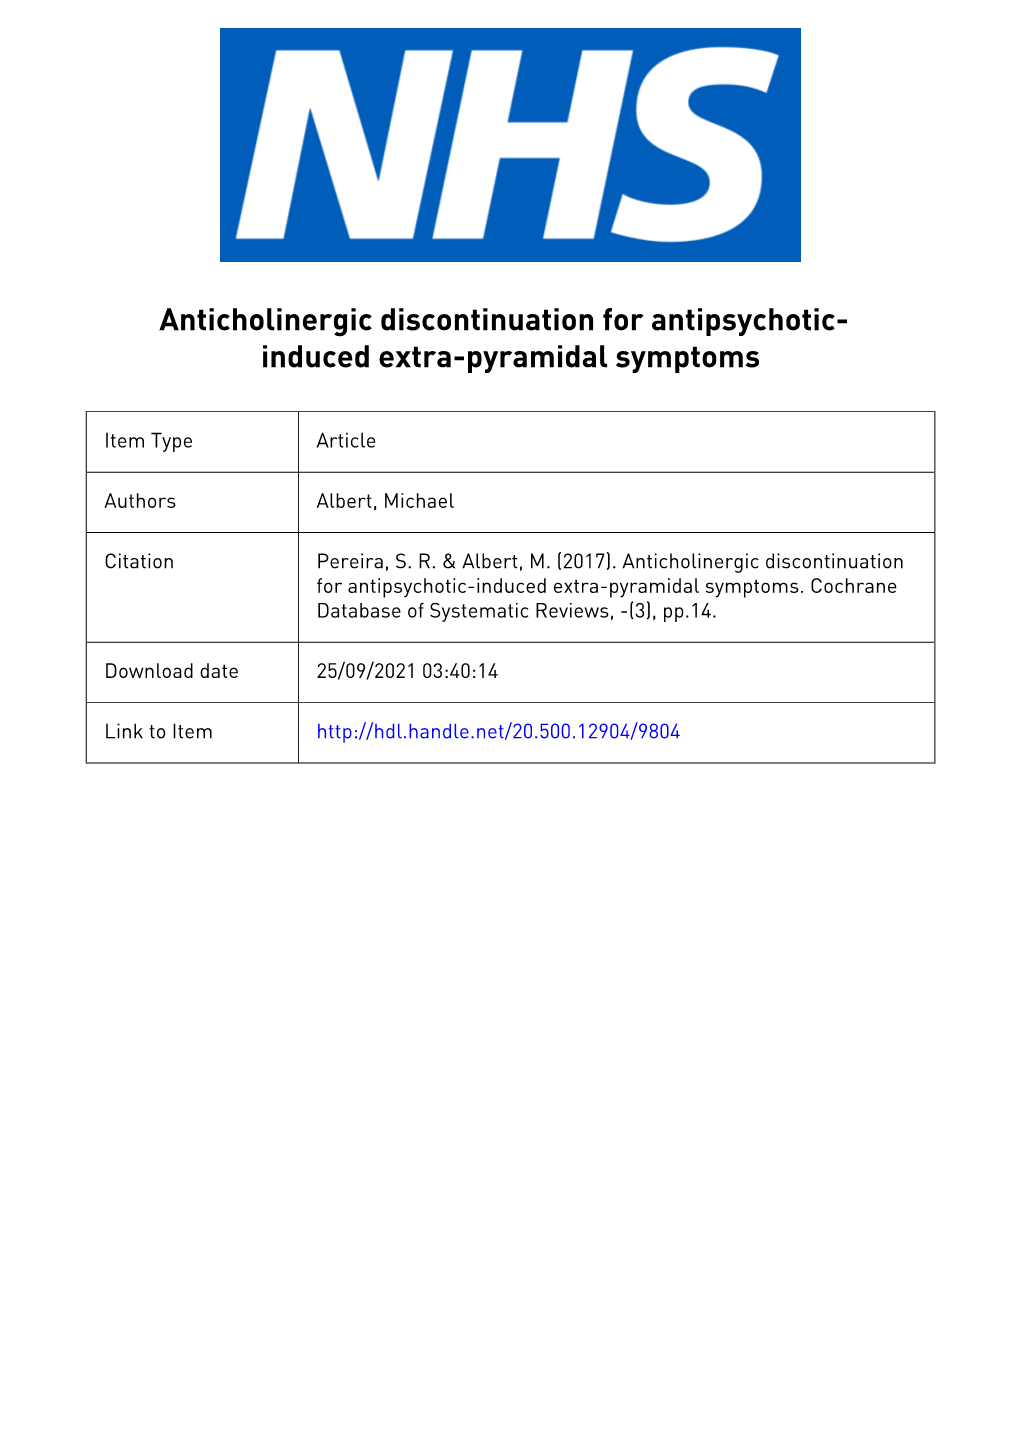 Anticholinergic Discontinuation for Antipsychotic-Induced Extra-Pyramidal Symptoms